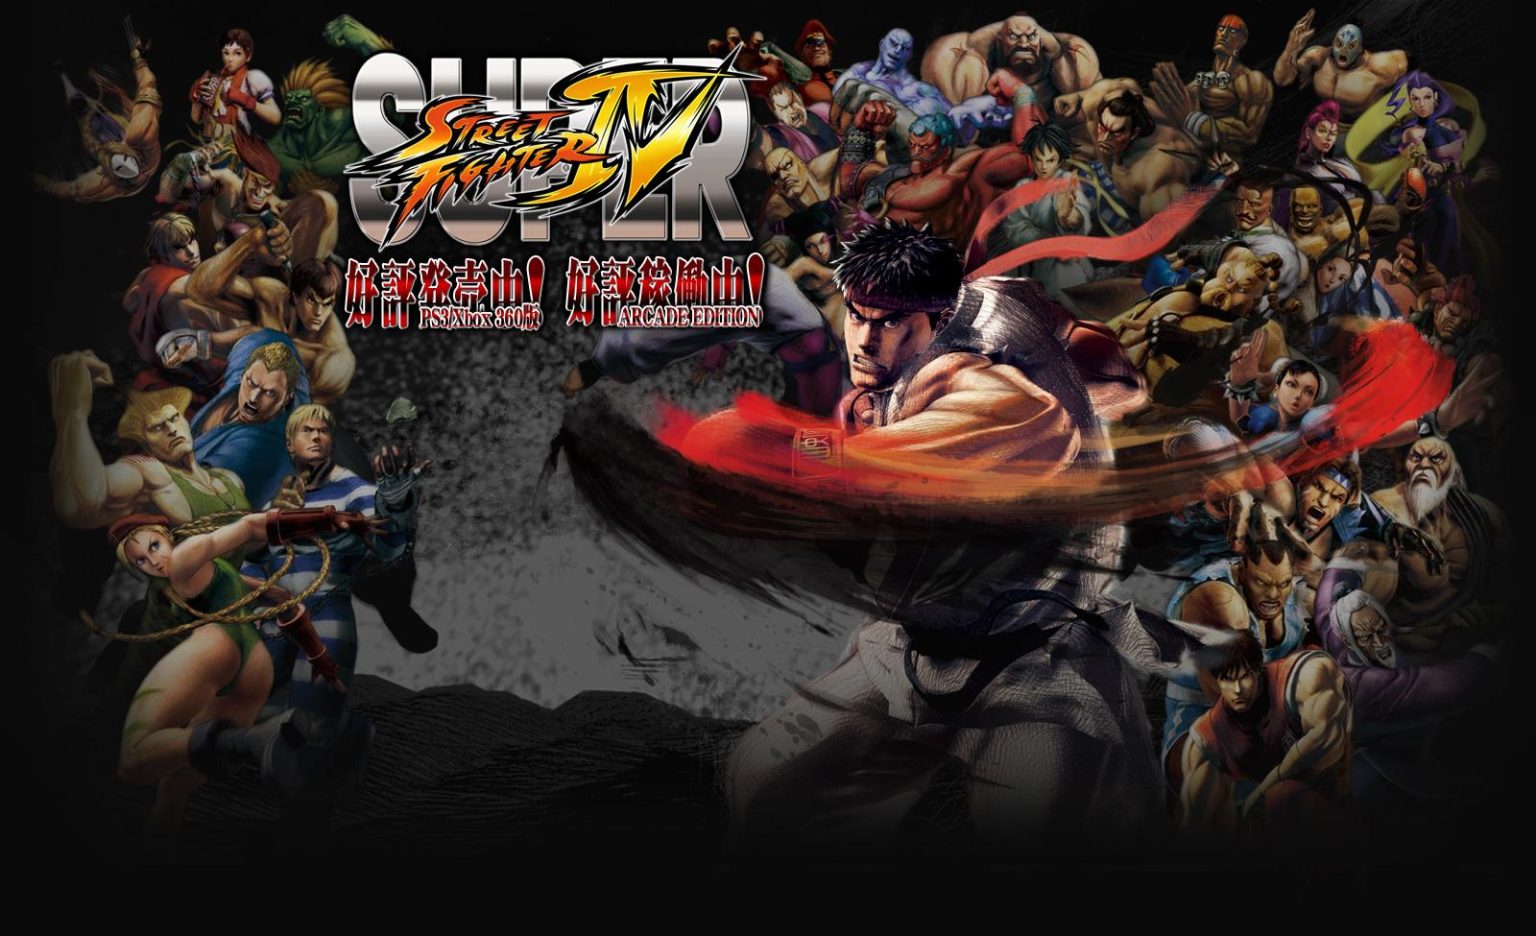 Ultra Street Fighter IV Wallpaper For Ipad - Wallpaperforu